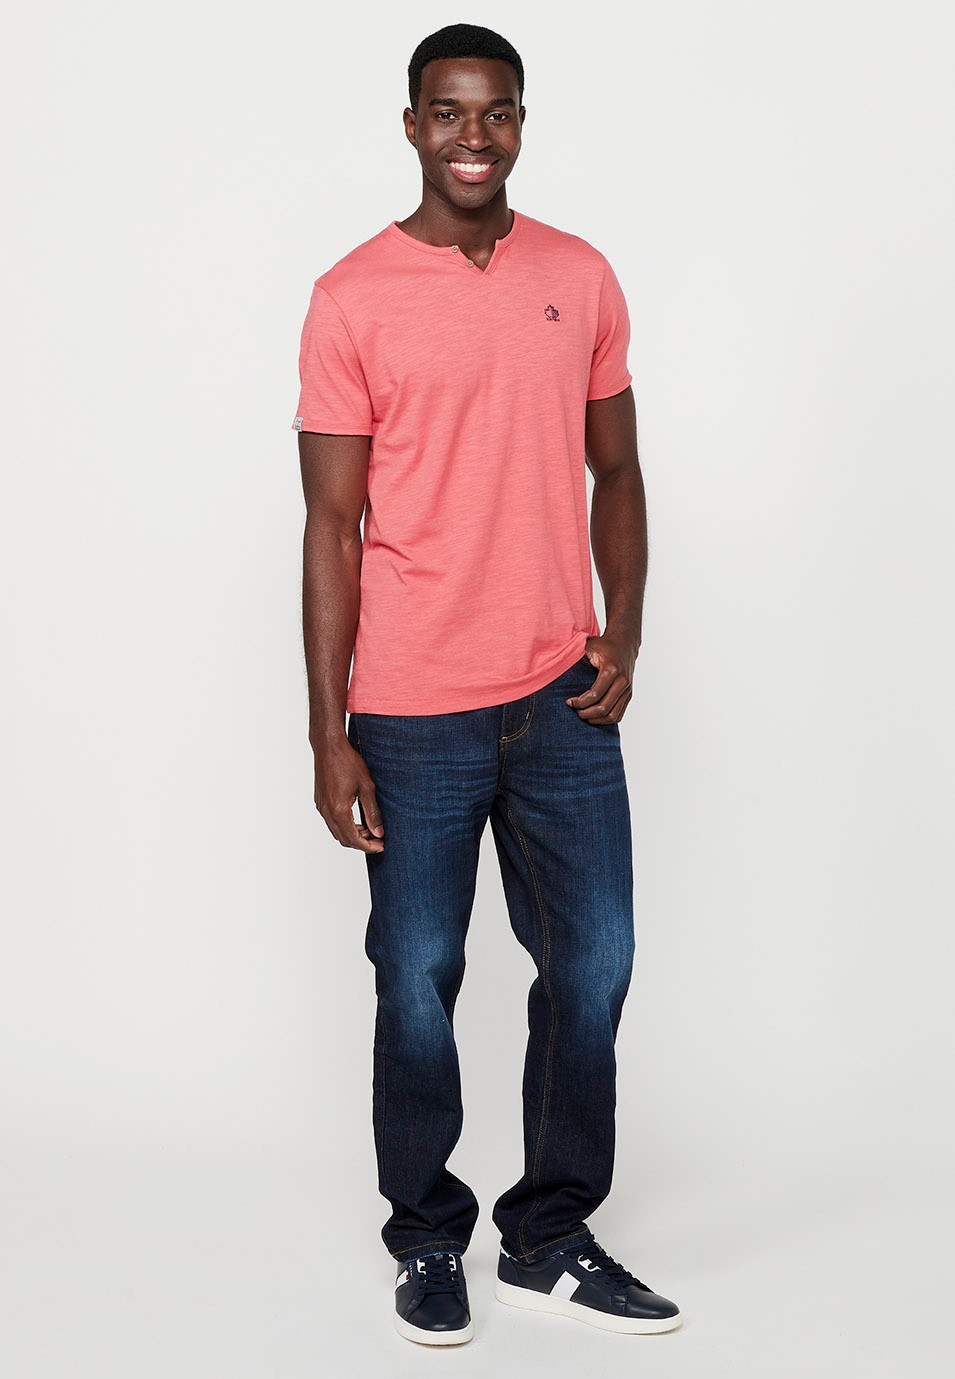 Camiseta básica de manga corta de algodón, cuello V con boton, color rosa para hombre 5